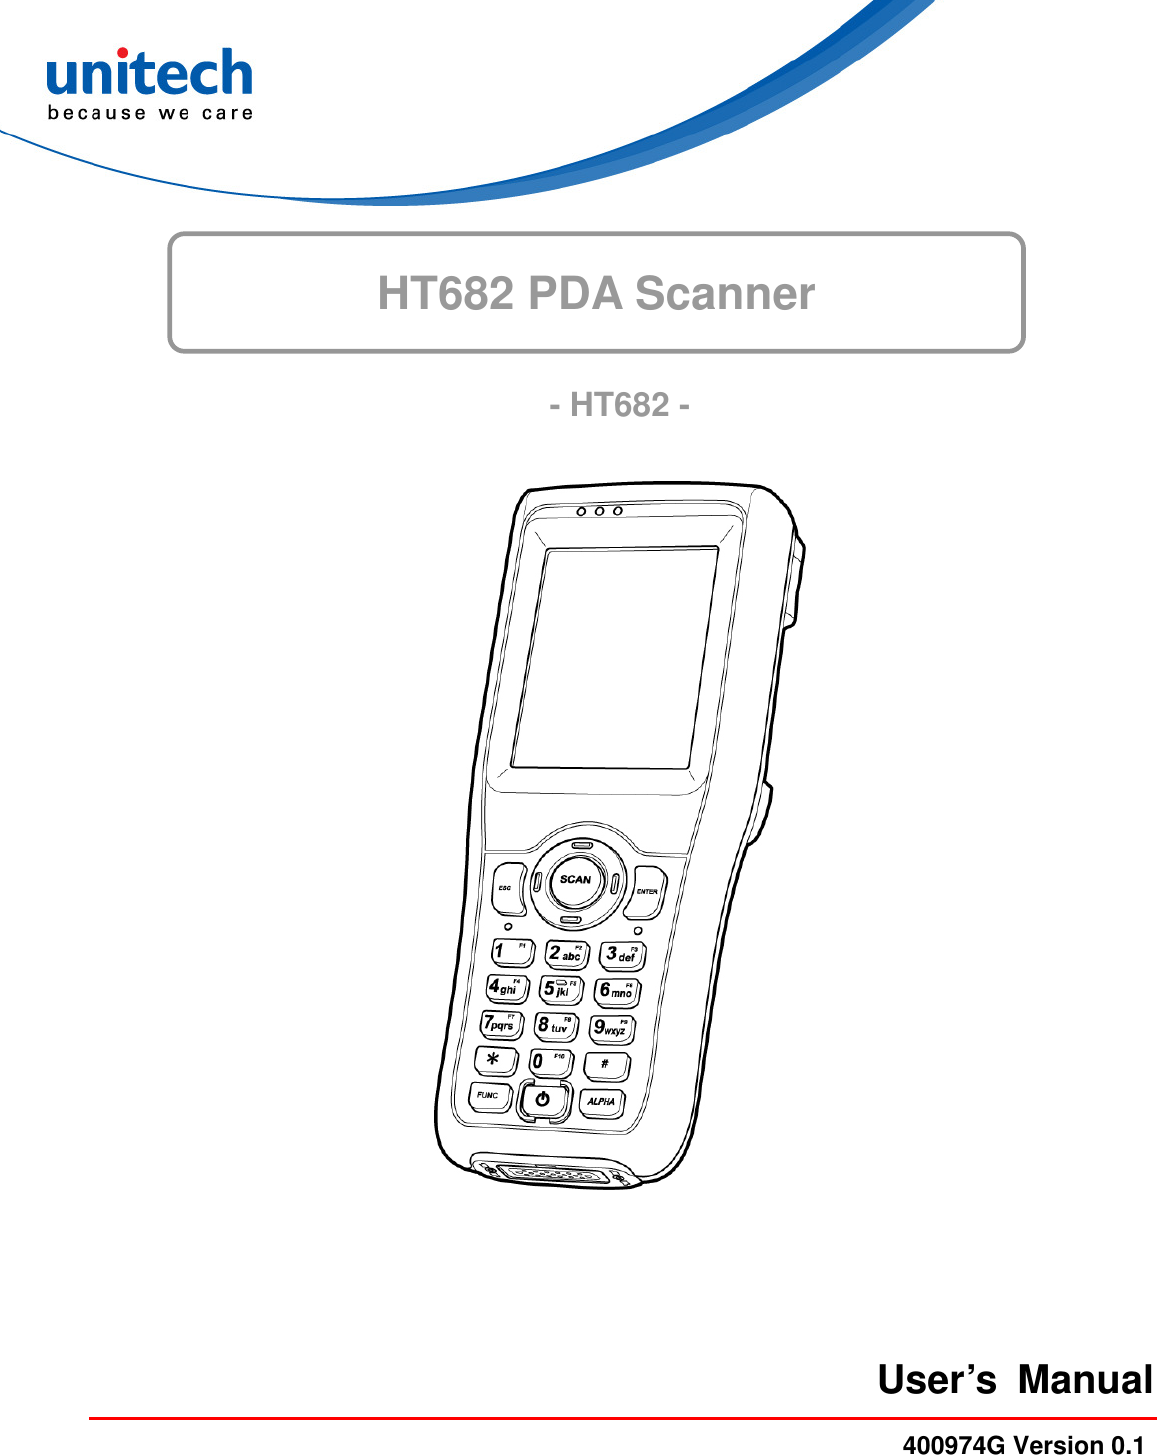  HT682 PDA Scanner     - HT682 -  User’s  Manual 400974G Version 0.1 